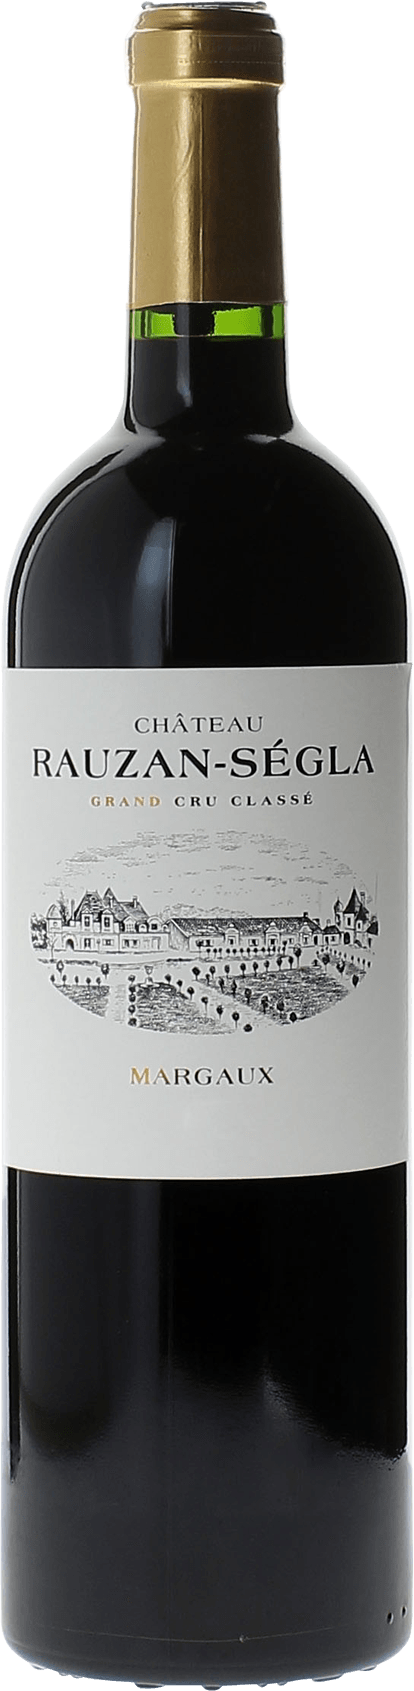 Rauzan-segla 2014 2me Grand cru class Margaux, Bordeaux rouge